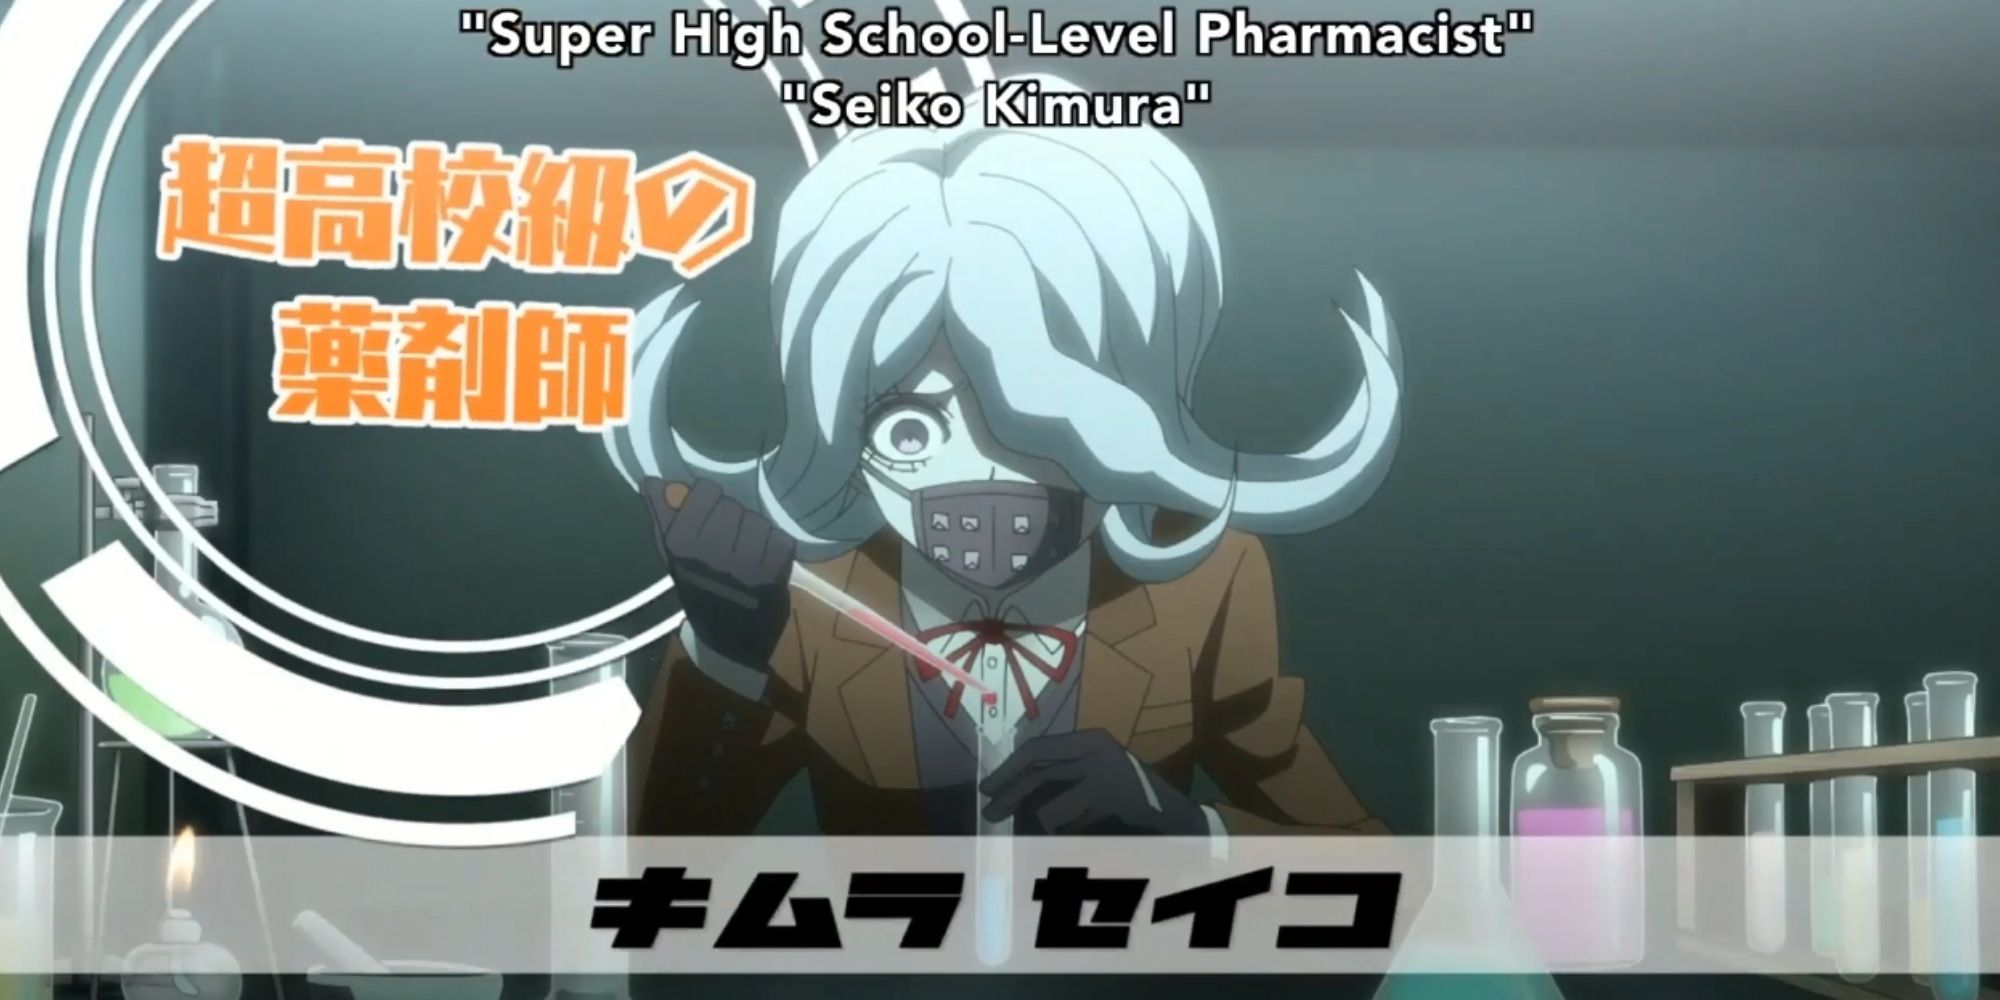 Seiko Kimura the ultimate pharmacist is creating a potion